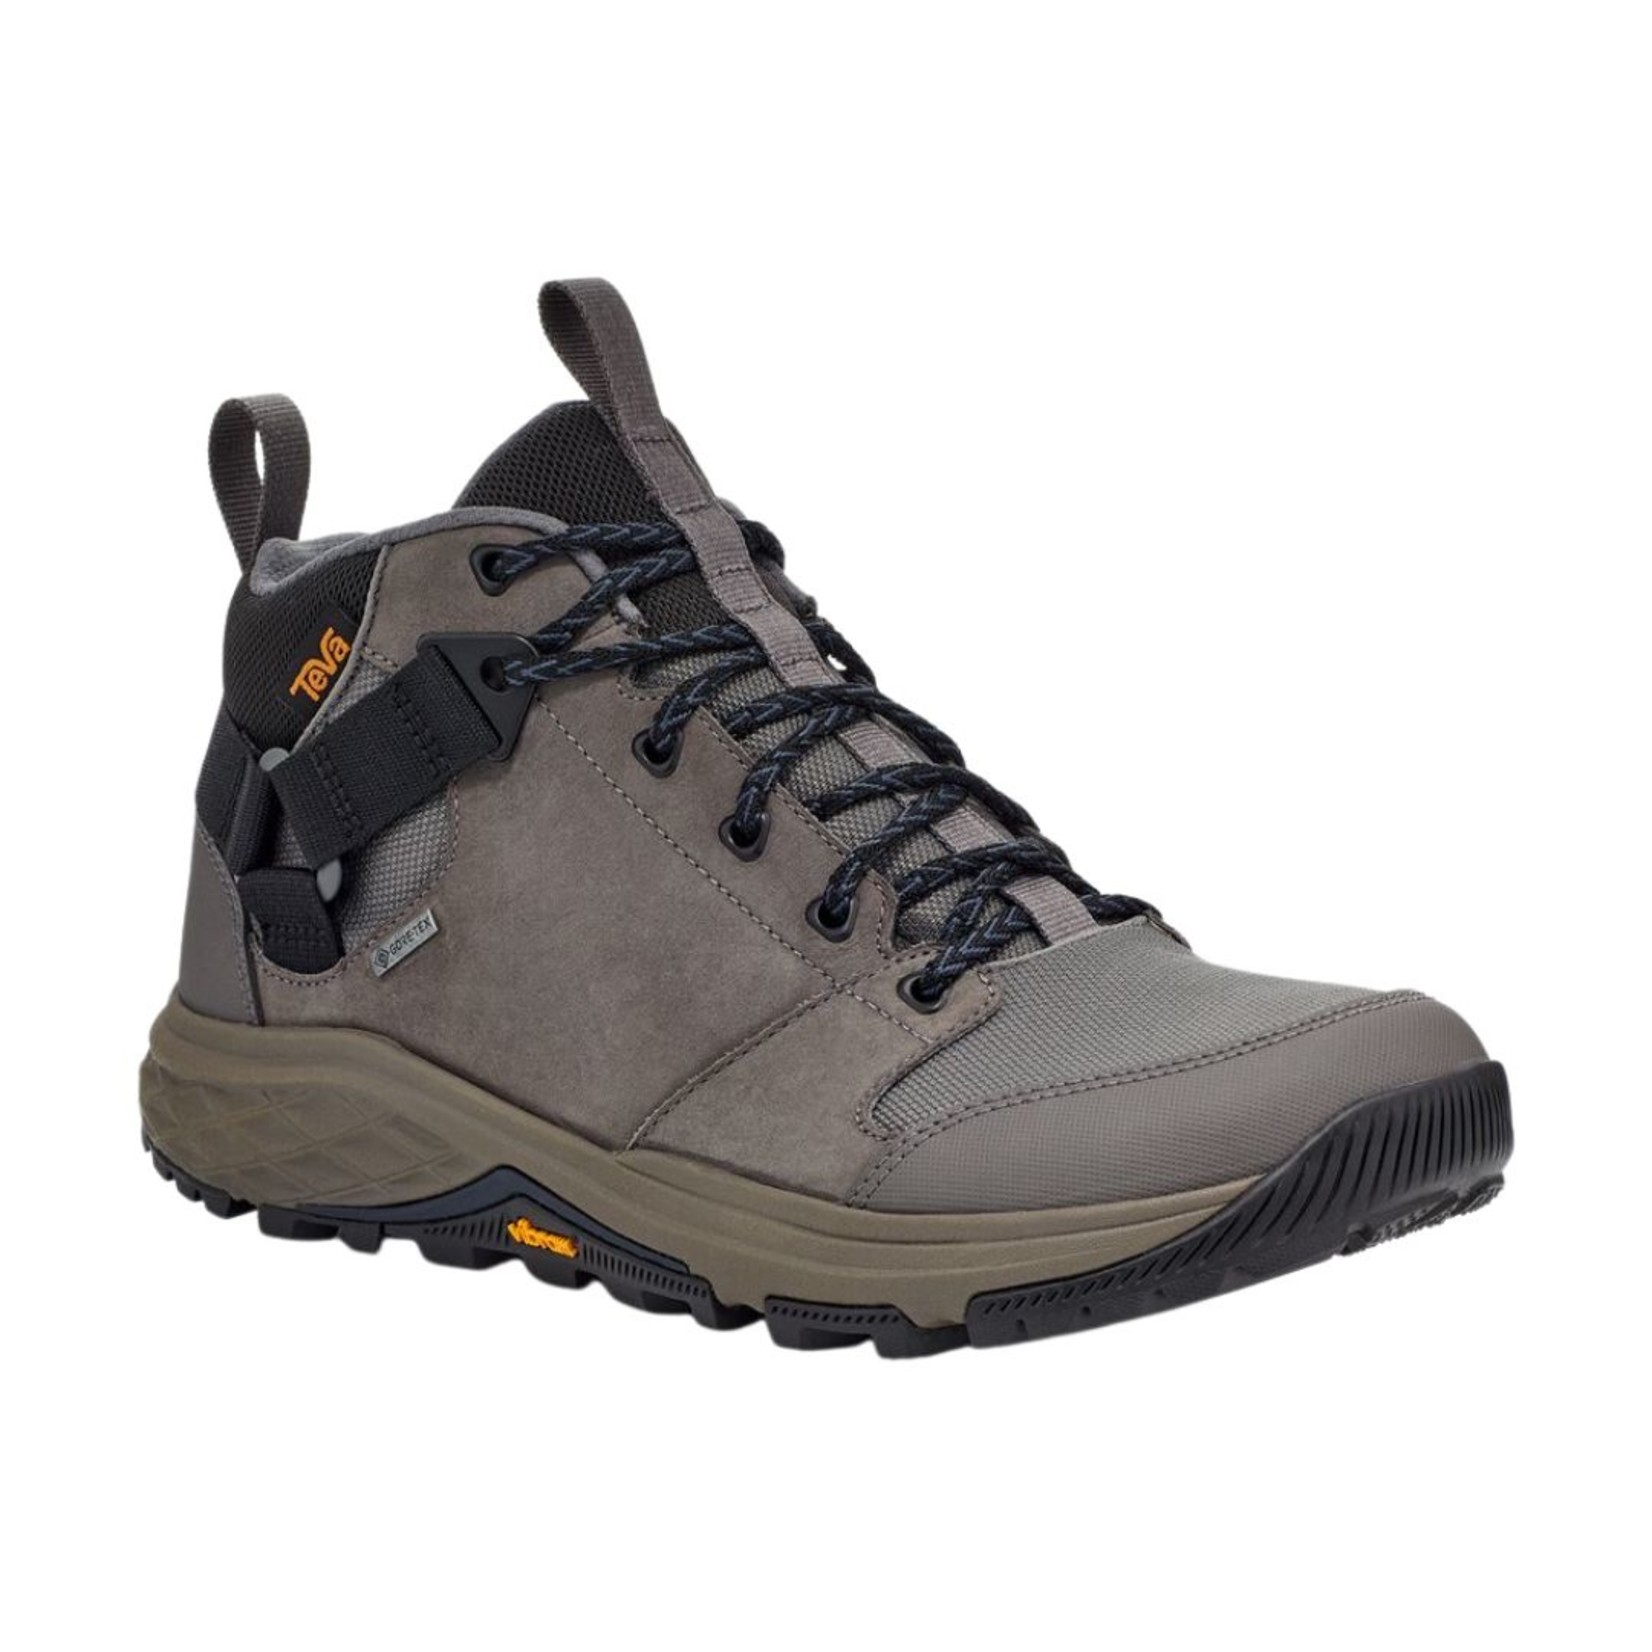 Teva GTX Hiking Boots - Shoes